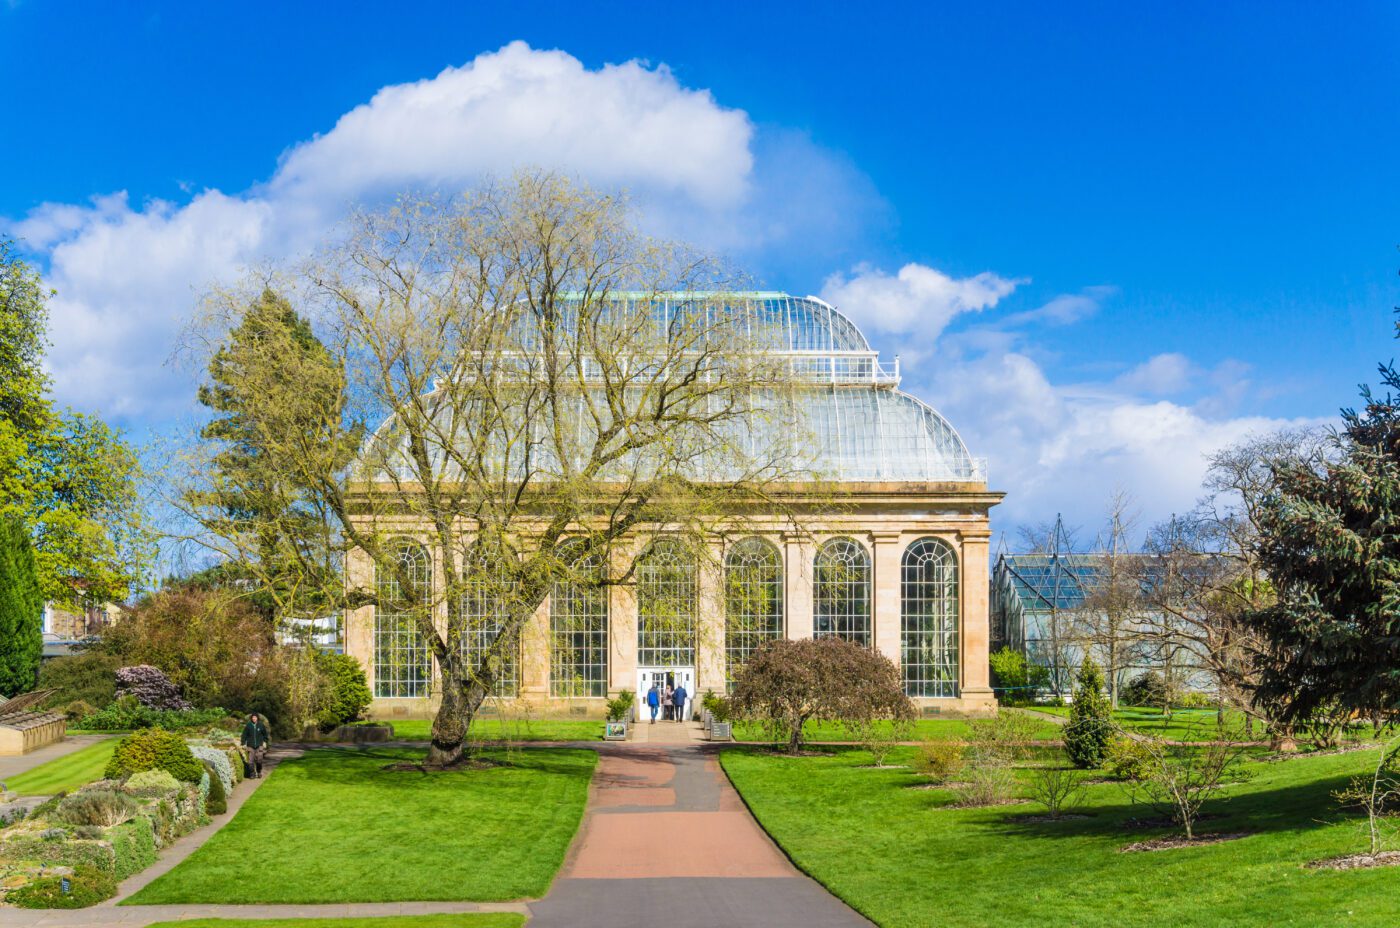 Glasshouse at the Royal Botanical Gardens in public park Edinburgh, Scotland, UK